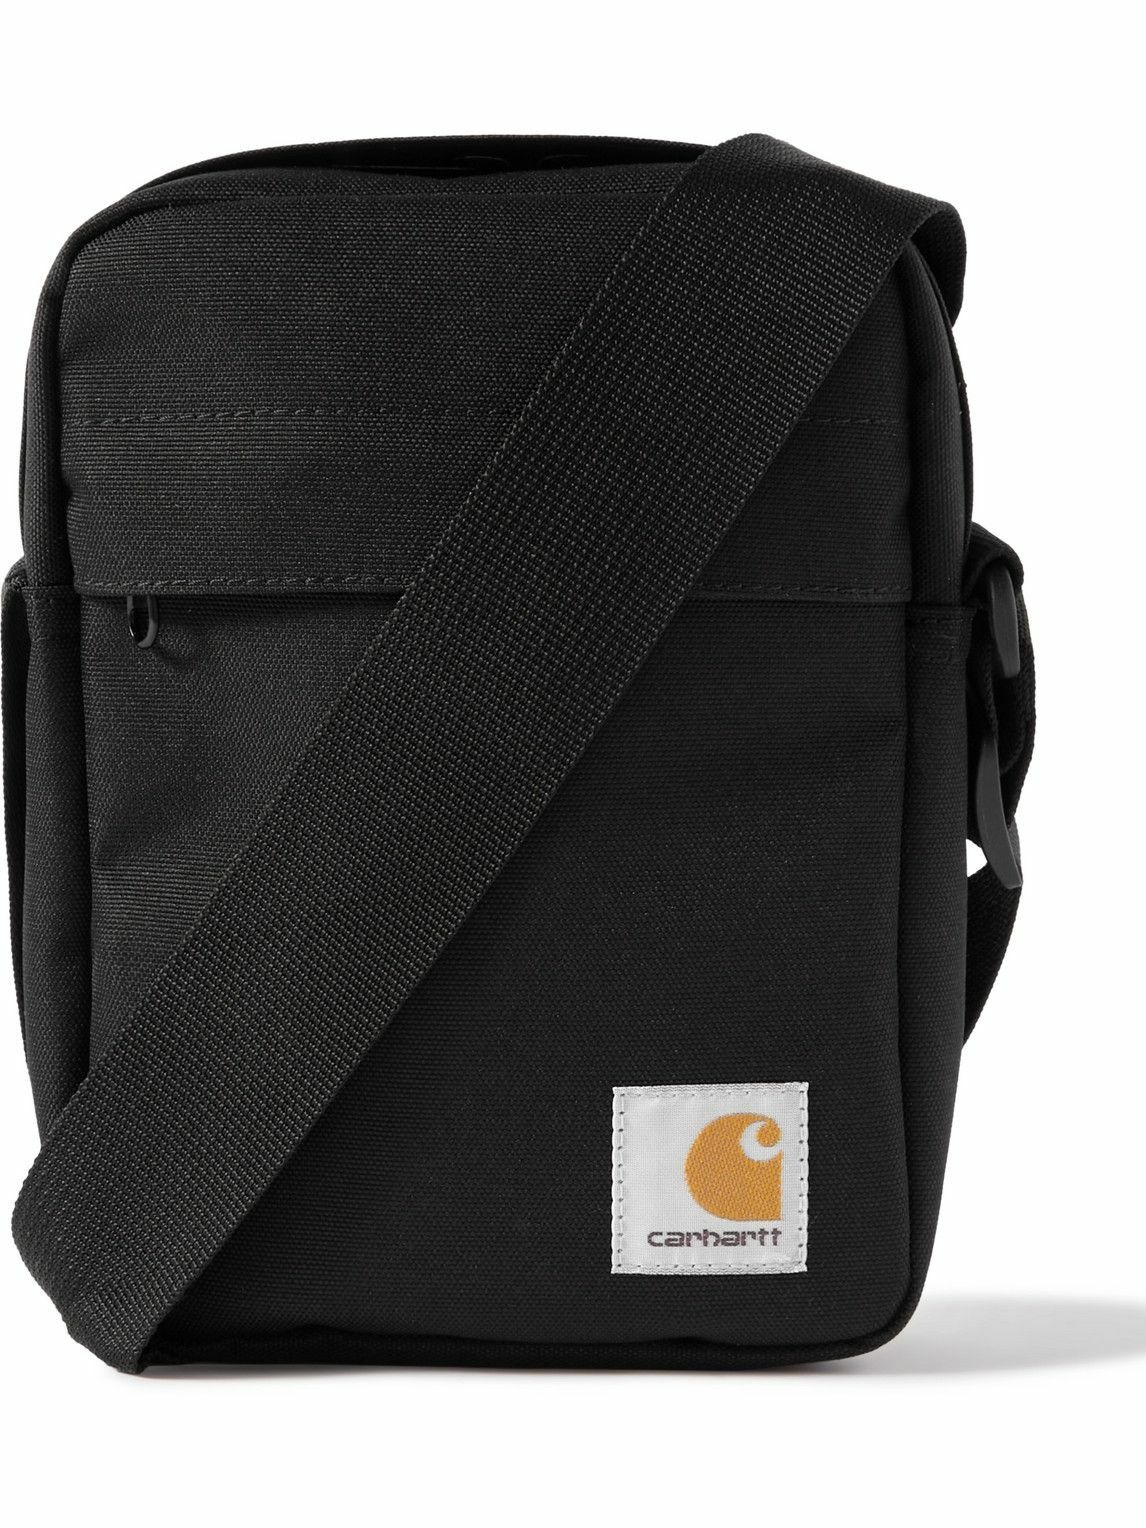 Carhartt Cargo Series Messenger Bag Black CB0370